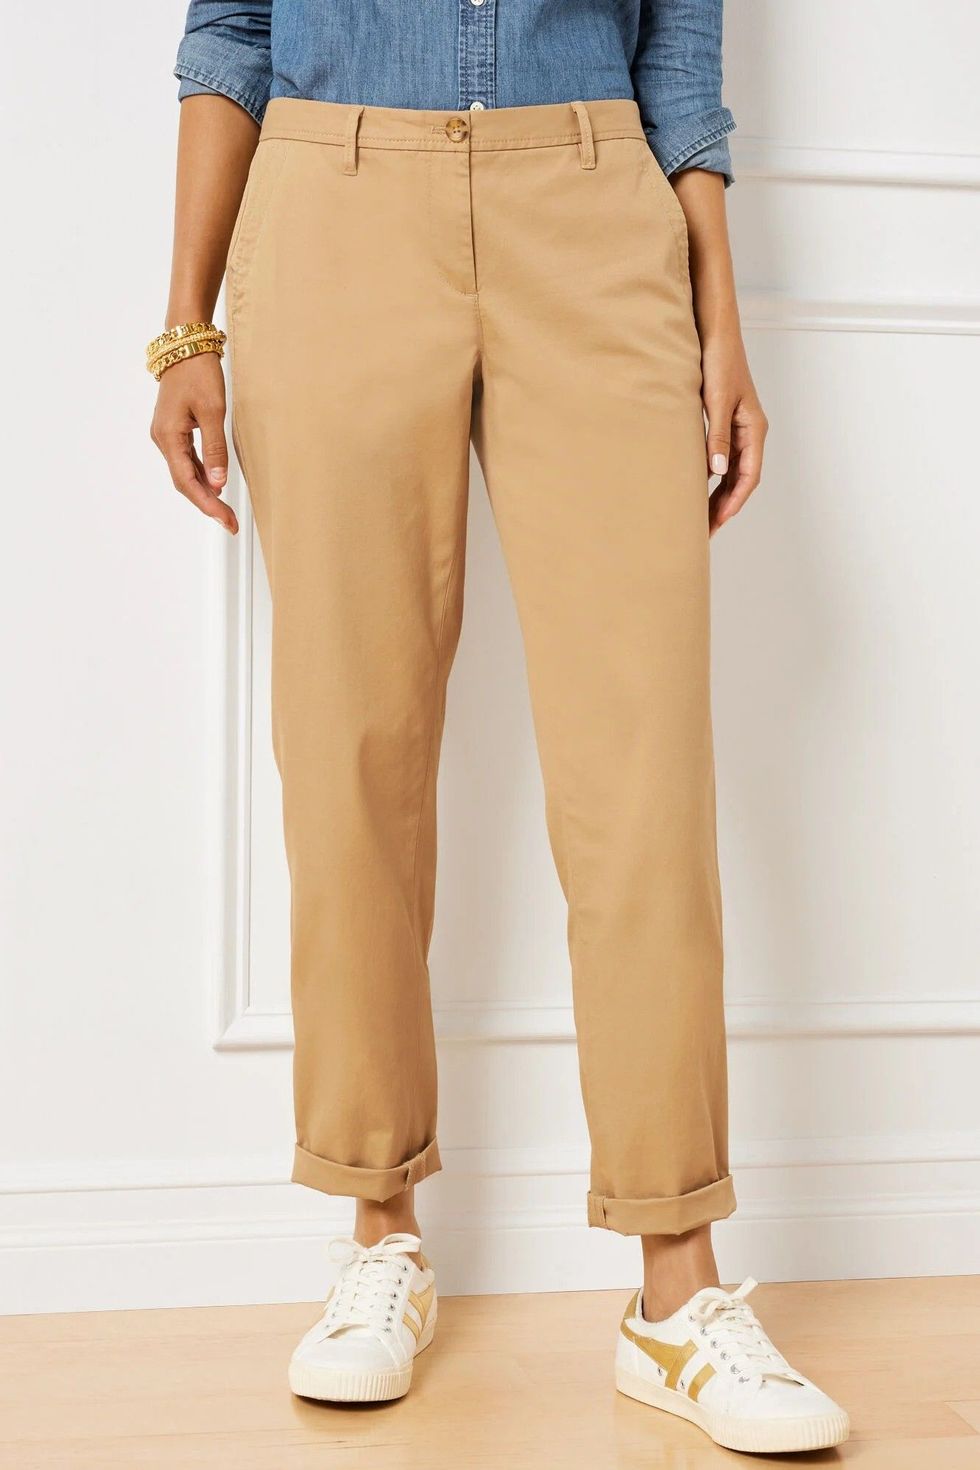 Talbot's Women's Flat Front Capri Pants Khaki Tan Size 12